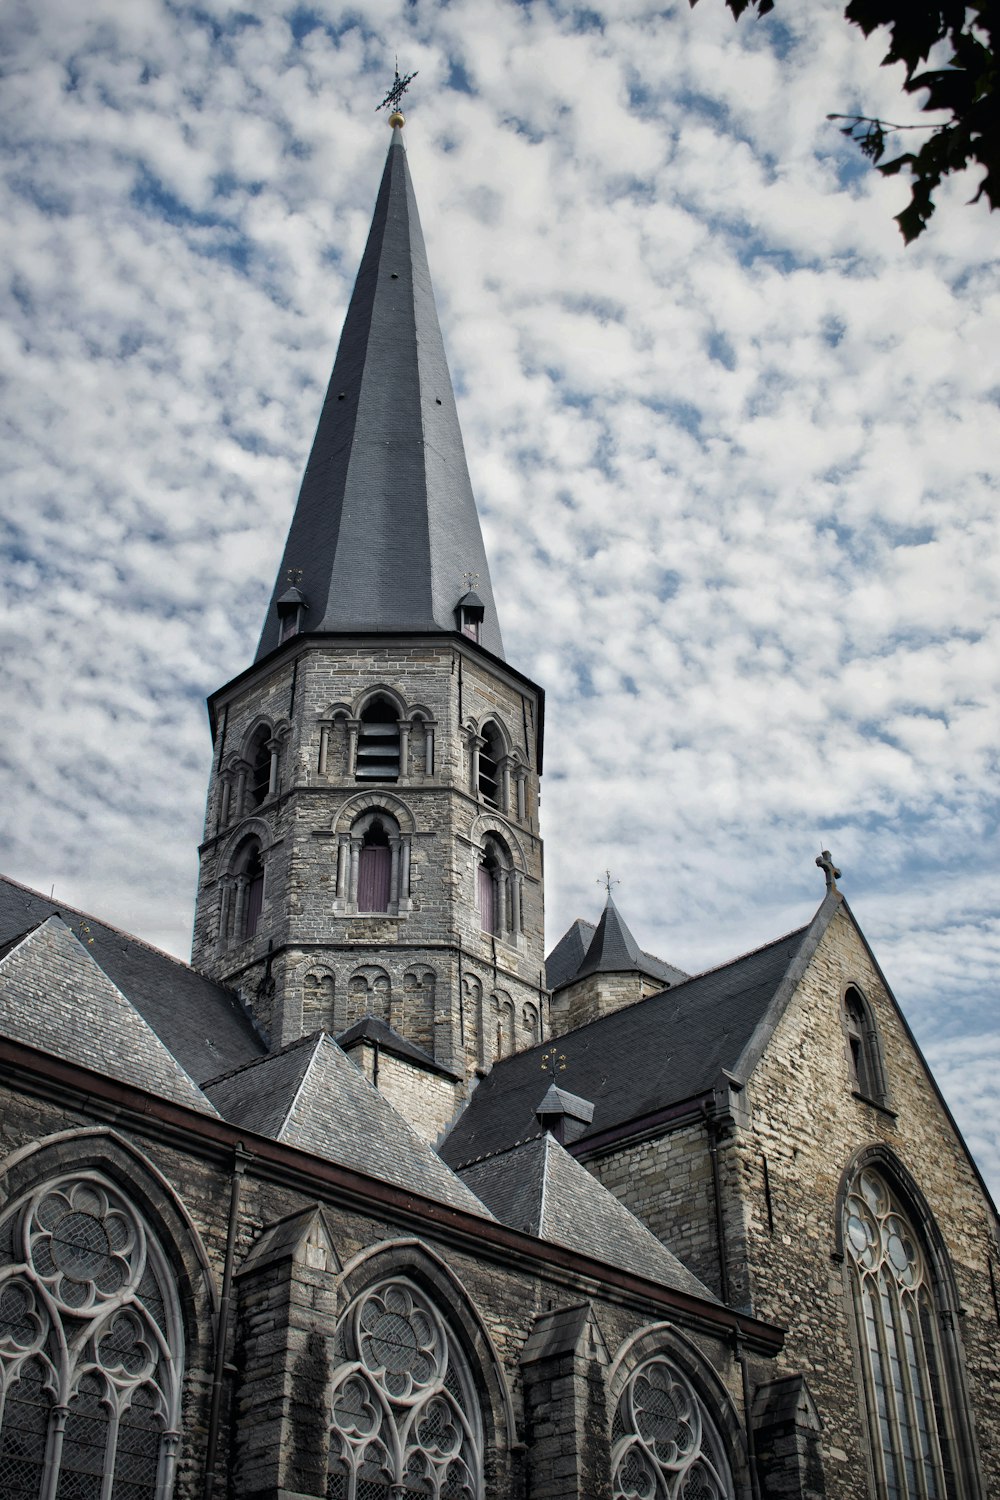 a church with a tall steeple